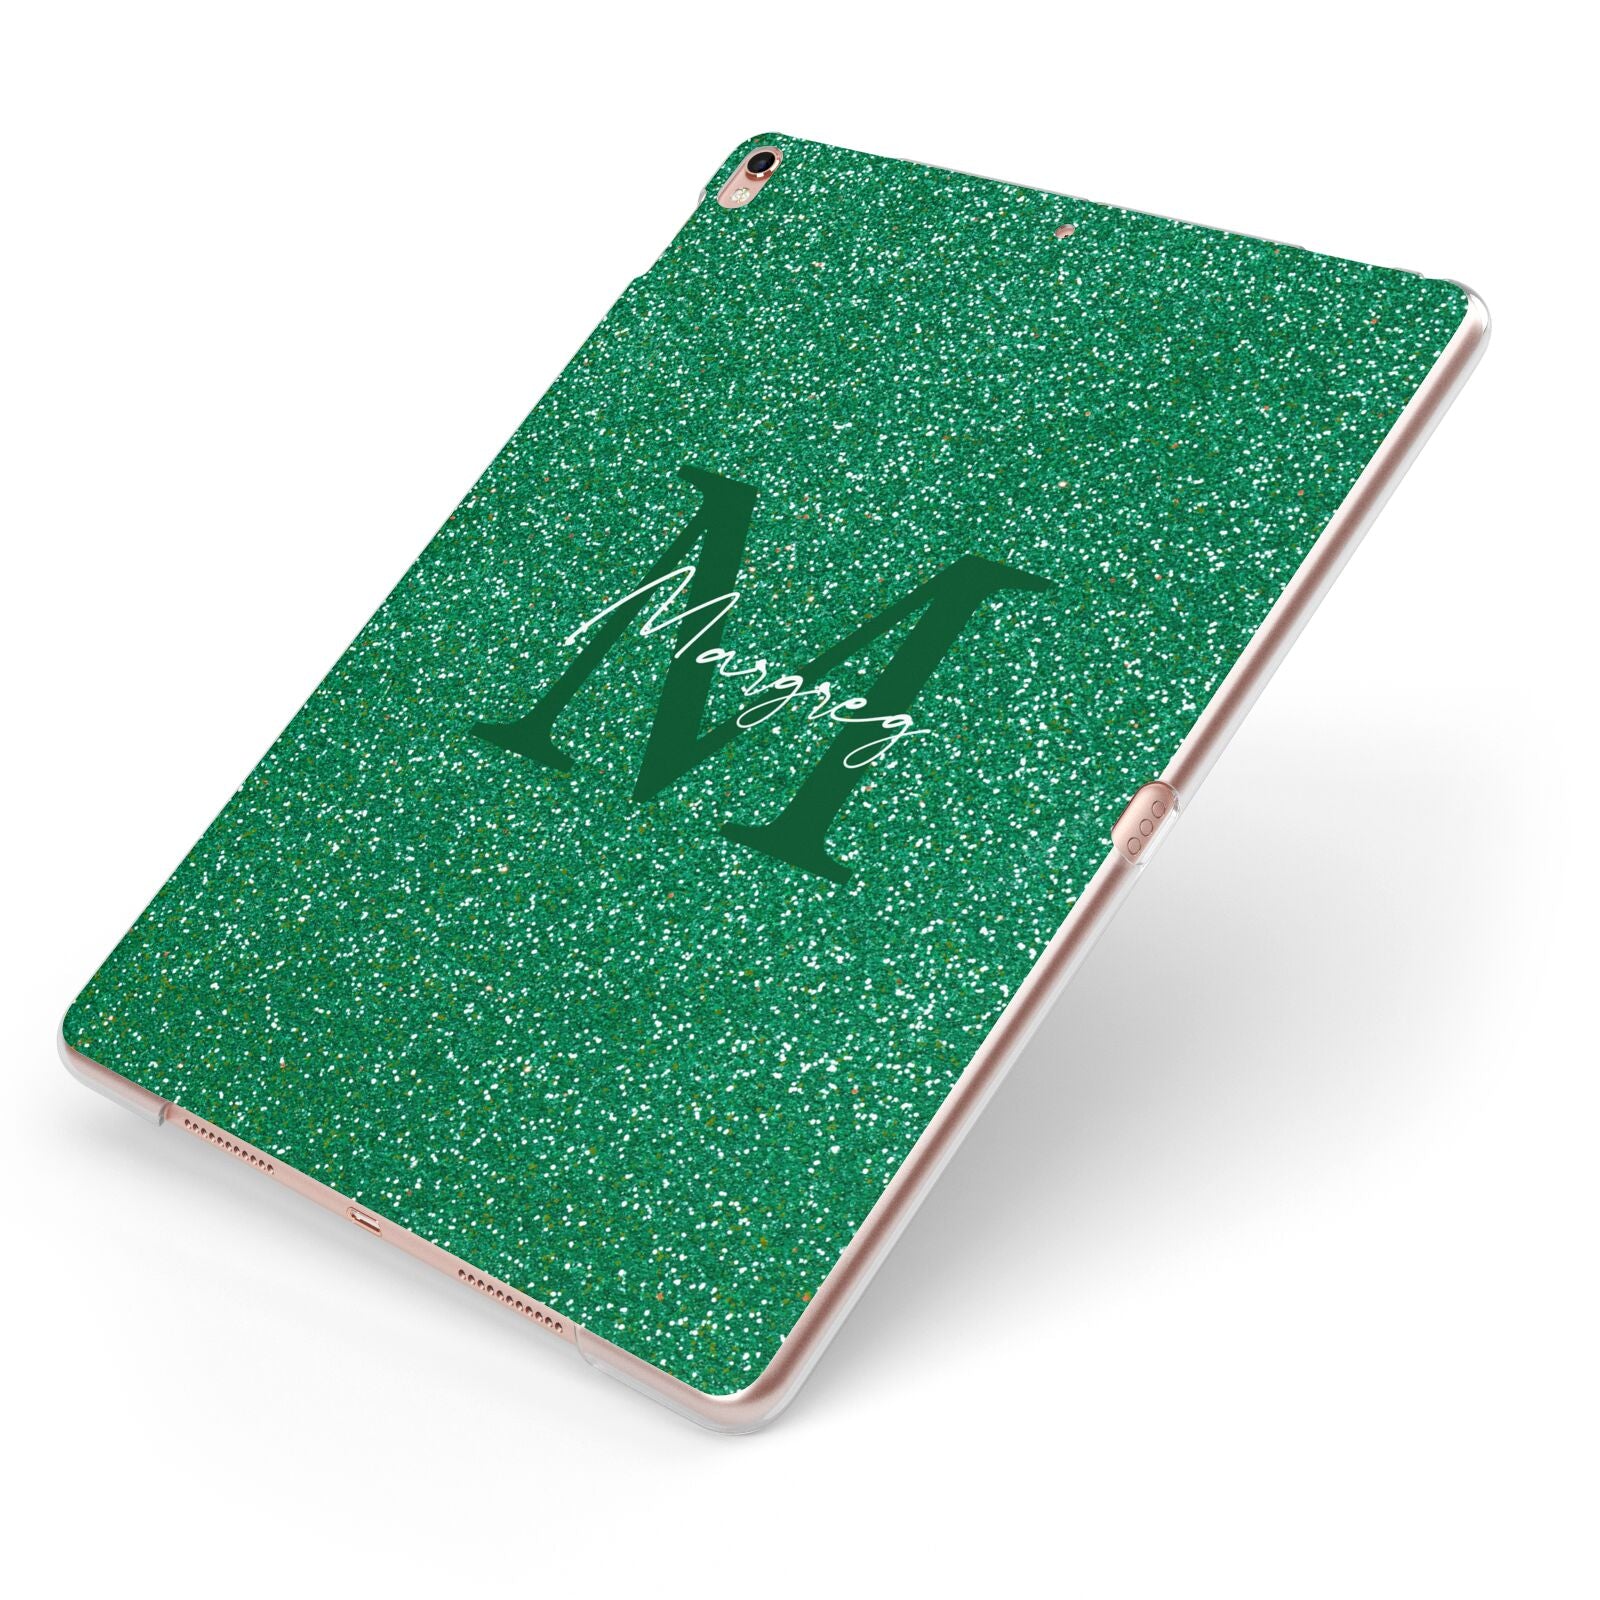 Green Monogram Apple iPad Case on Rose Gold iPad Side View